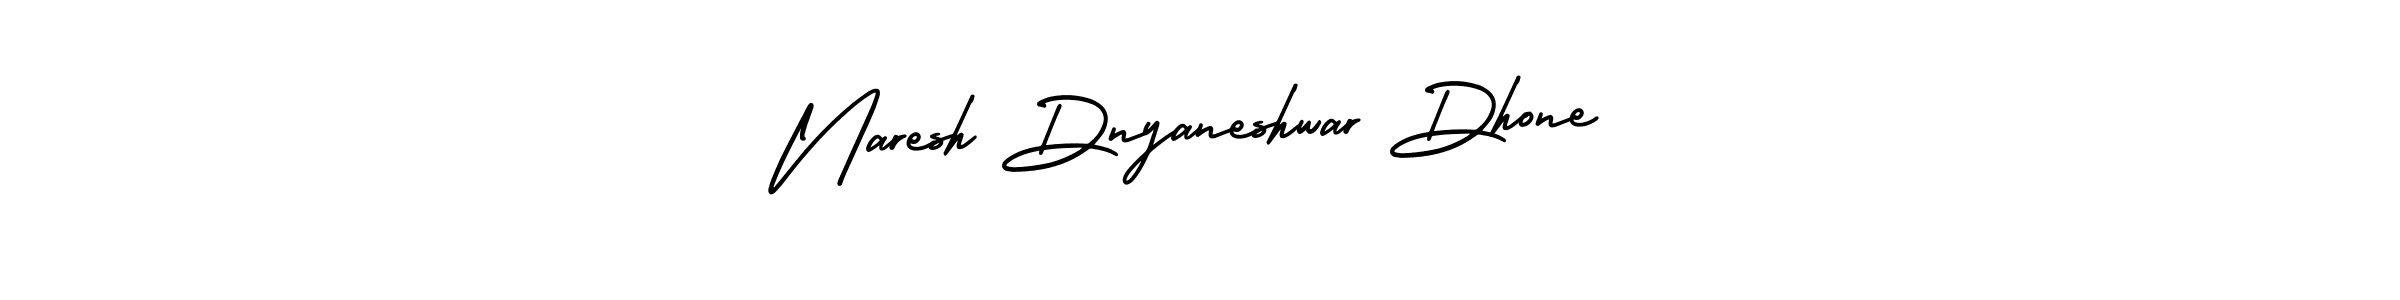 Best and Professional Signature Style for Naresh Dnyaneshwar Dhone. AmerikaSignatureDemo-Regular Best Signature Style Collection. Naresh Dnyaneshwar Dhone signature style 3 images and pictures png